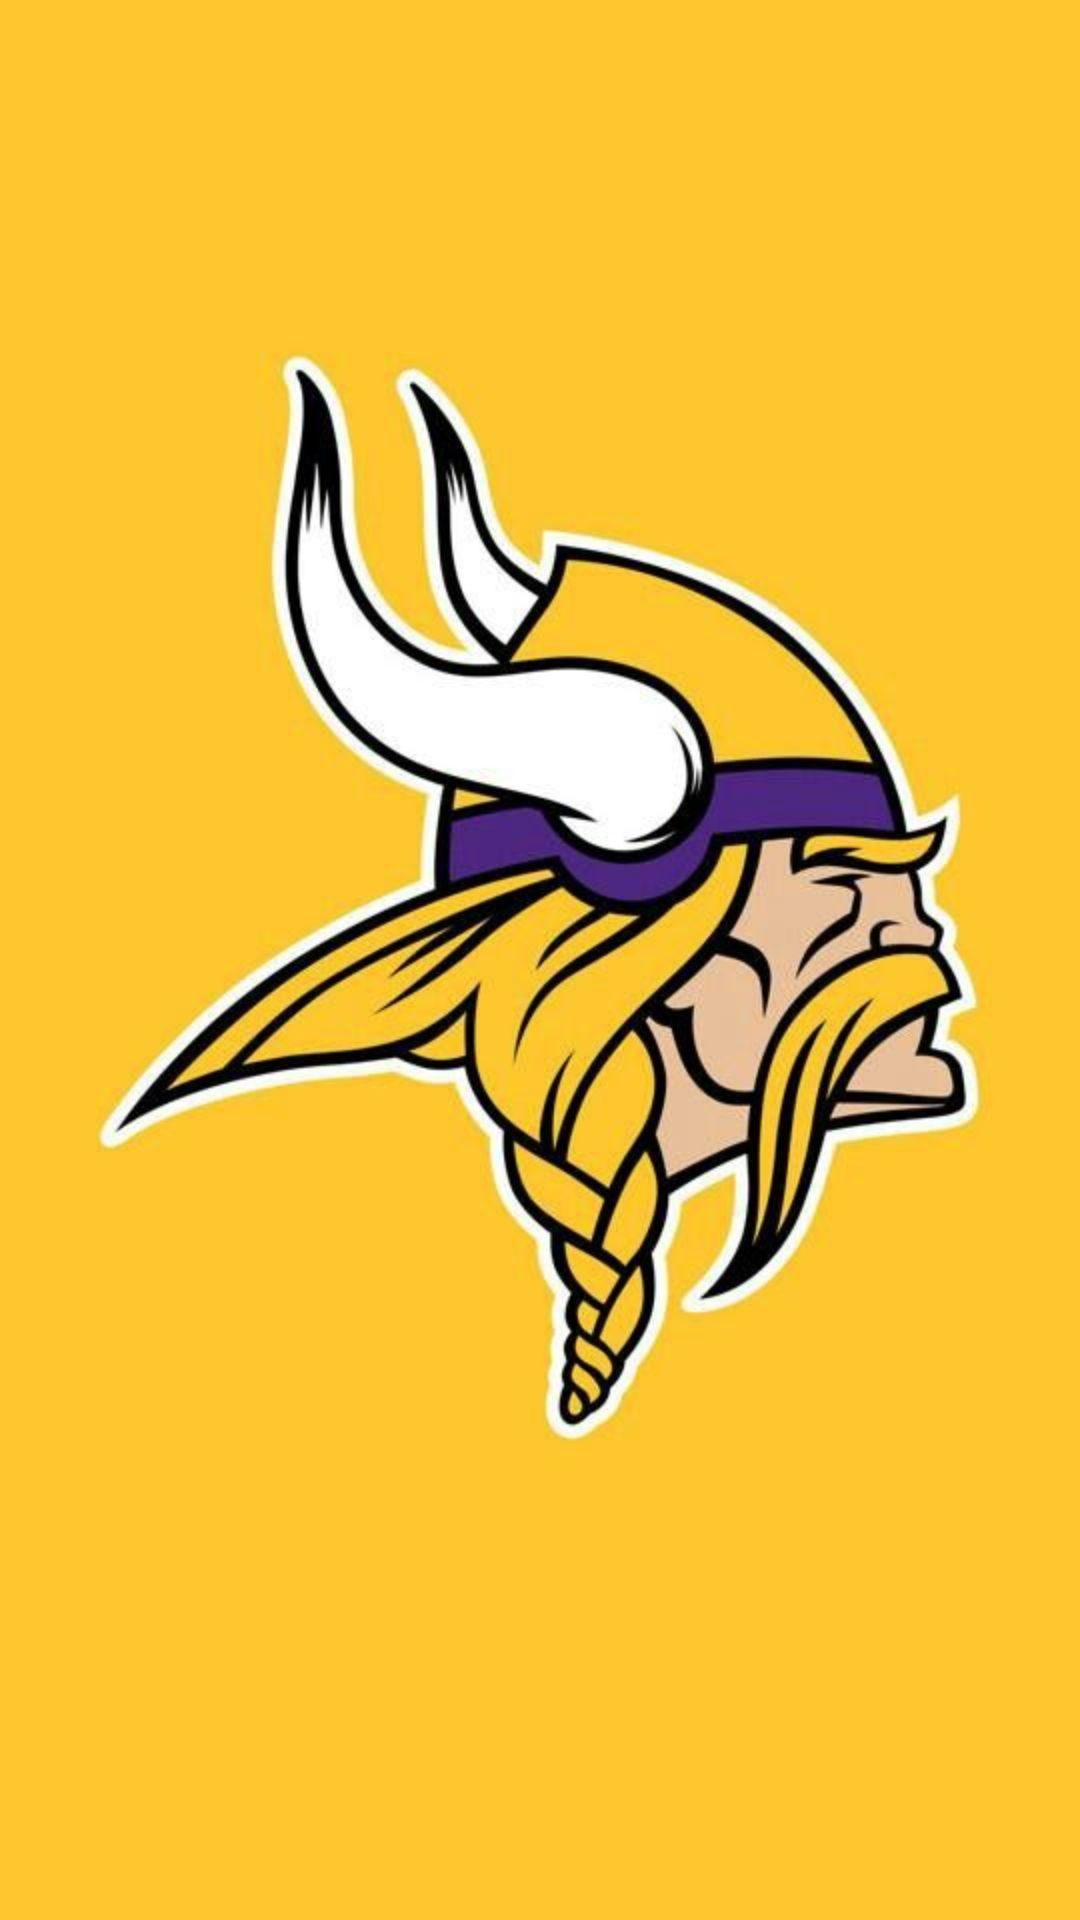 Minnesota Vikings Logo Wallpaper